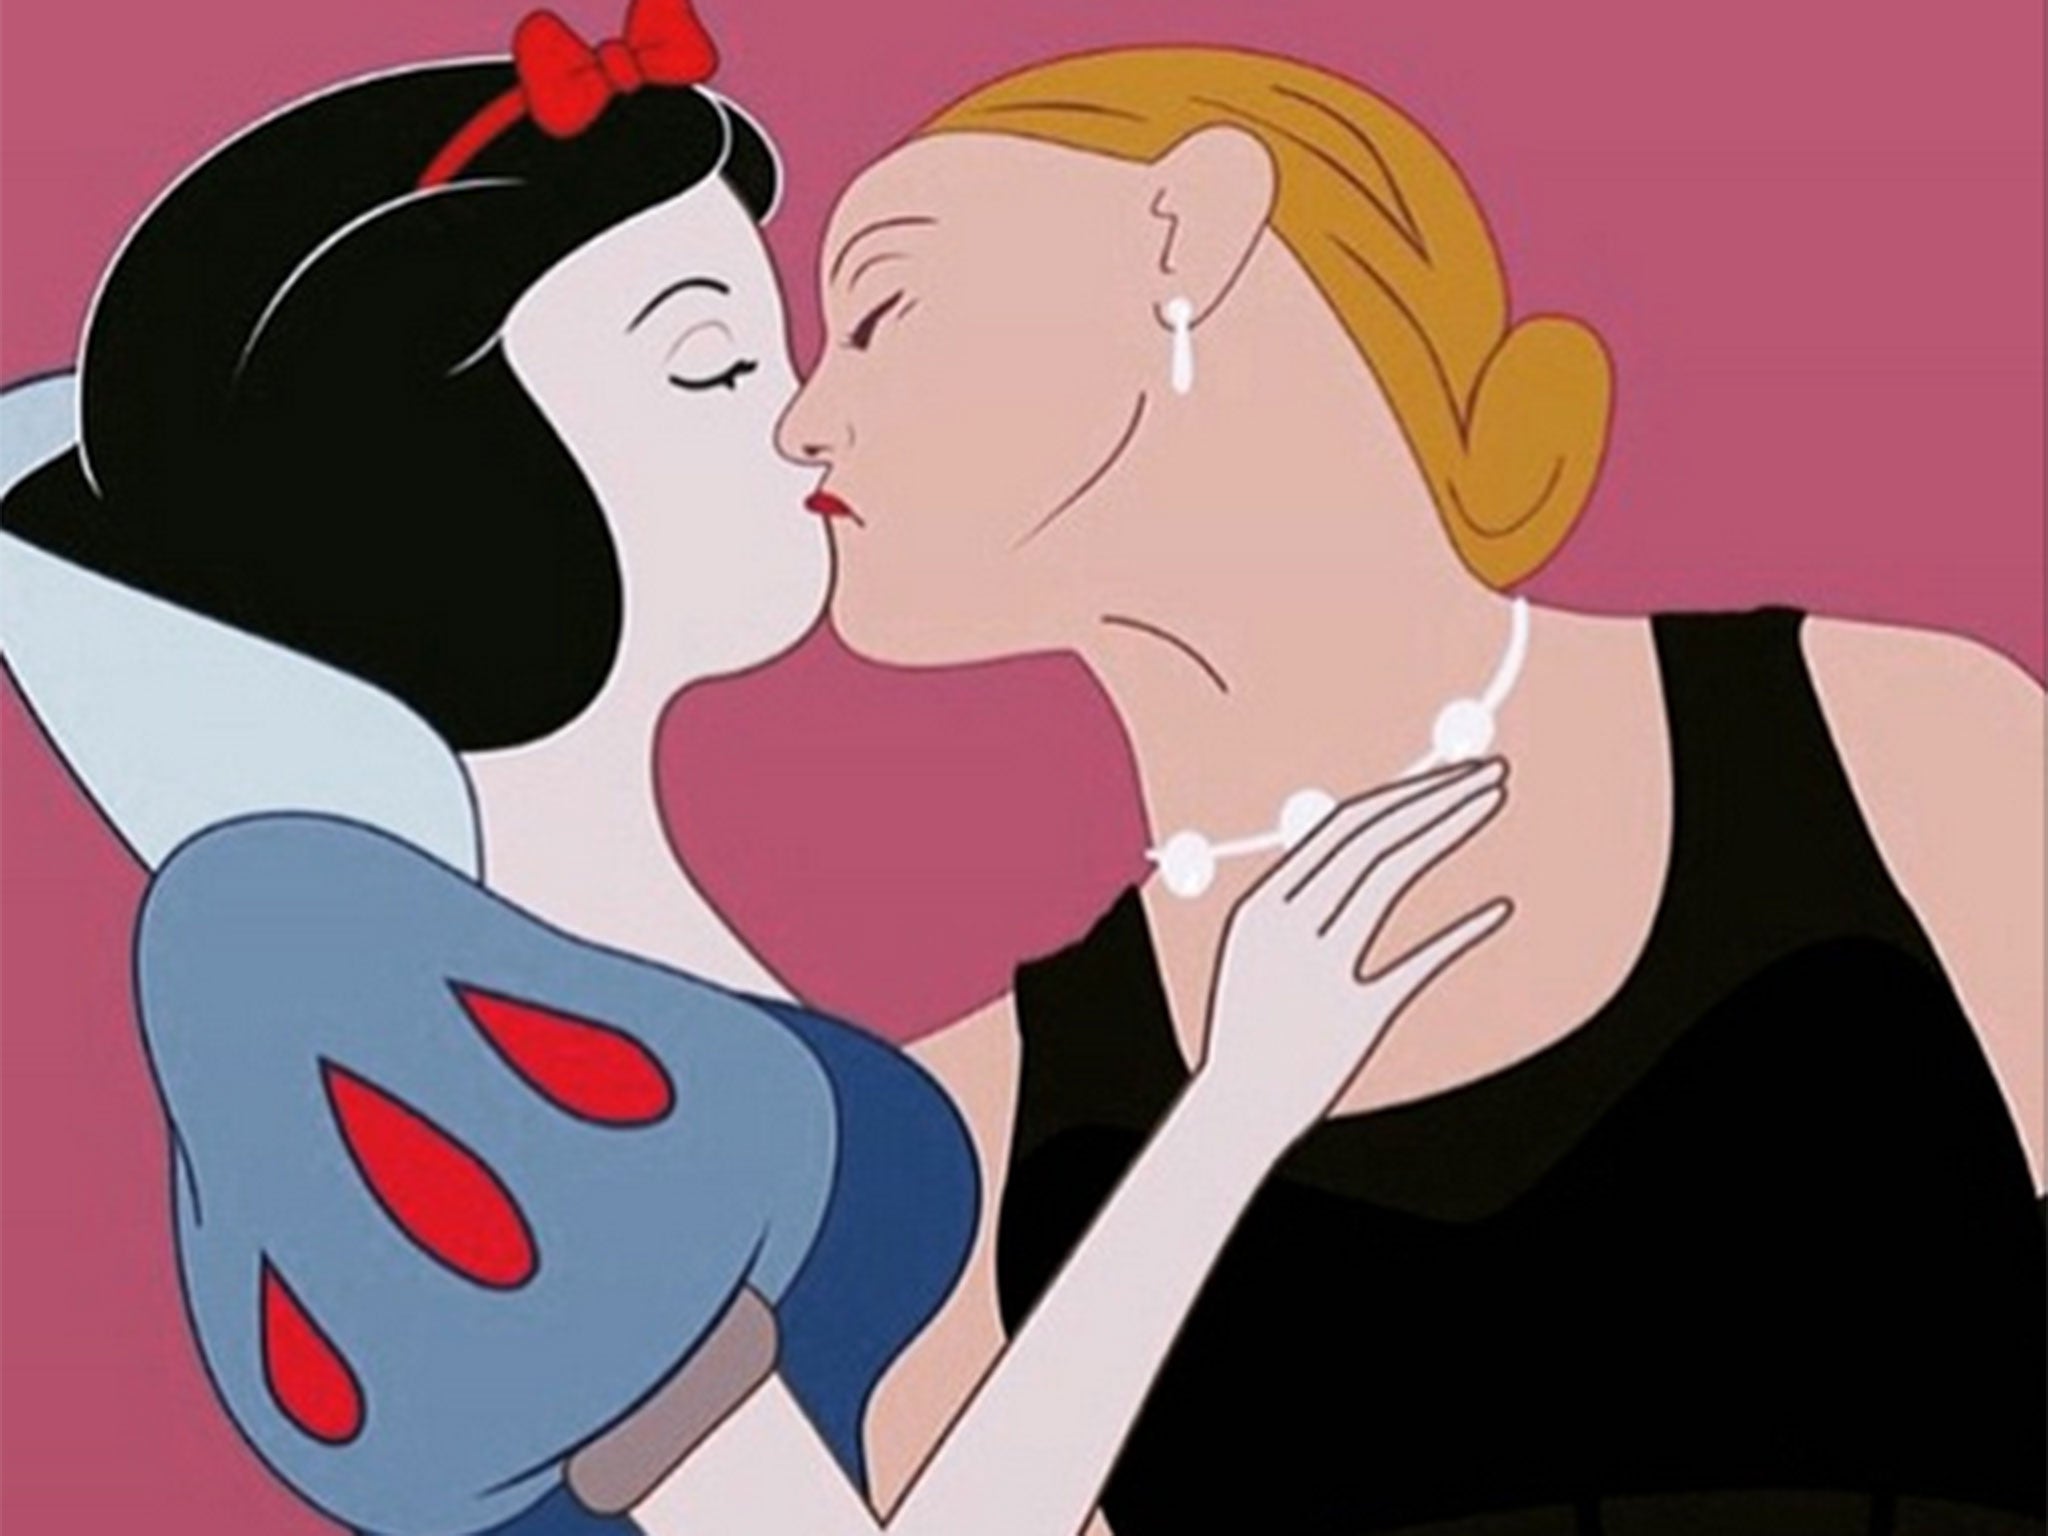 Madonna kisses Snow White in an artwork by Saint Hoax